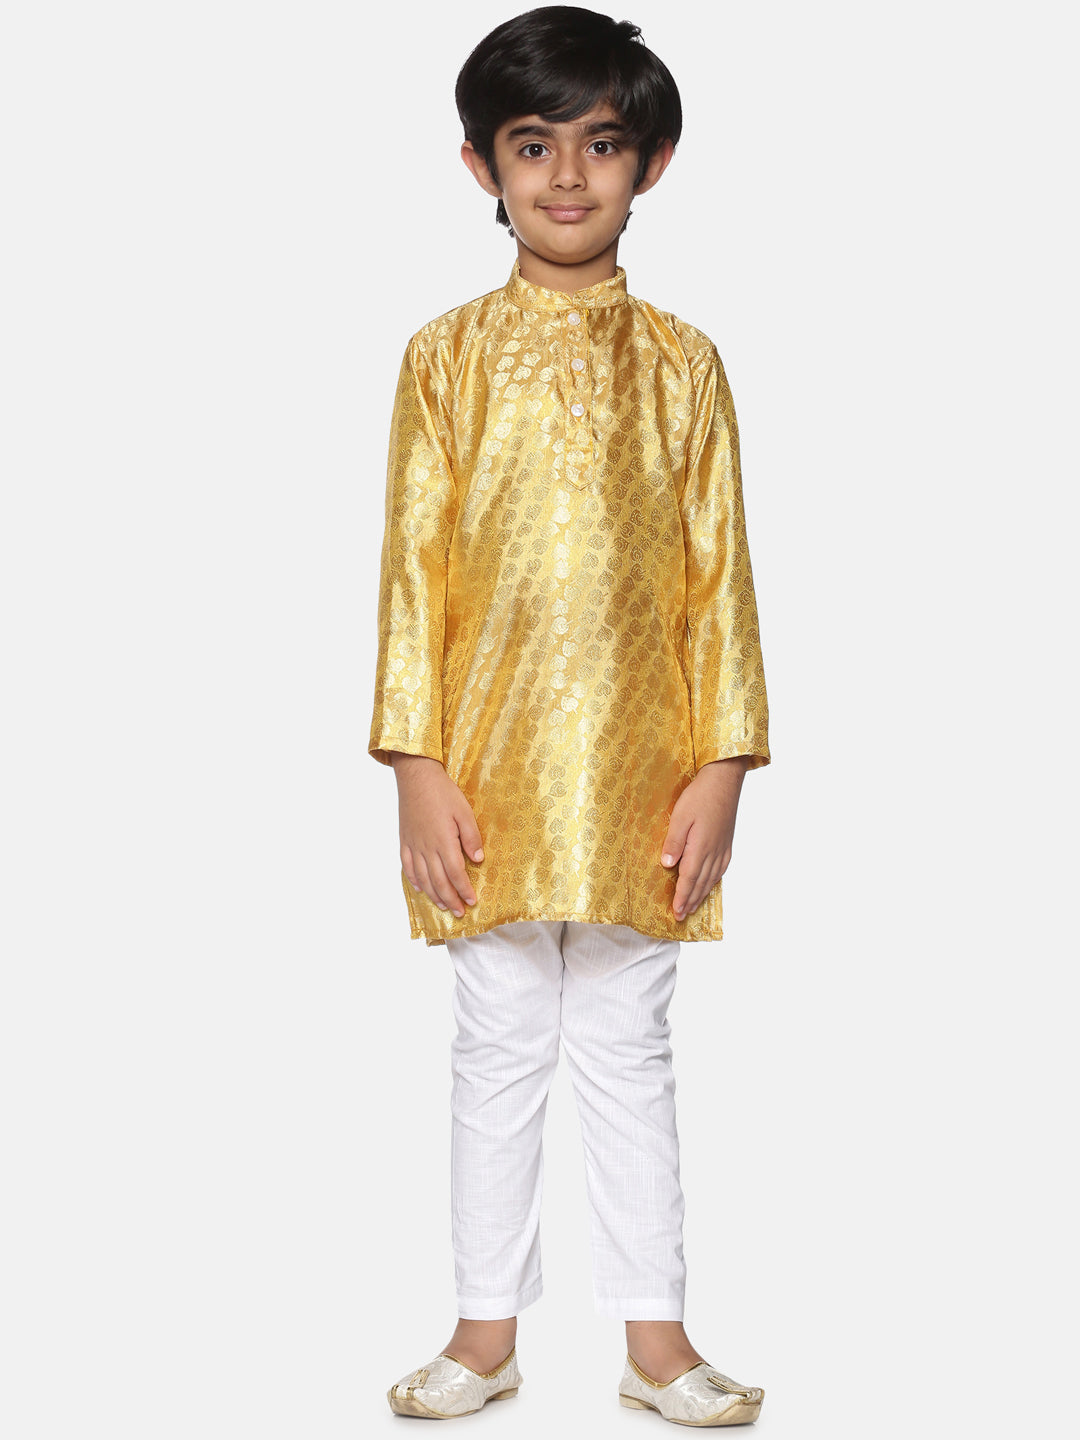 Boys Gold Colour Polyester Kurta Pyjama Set